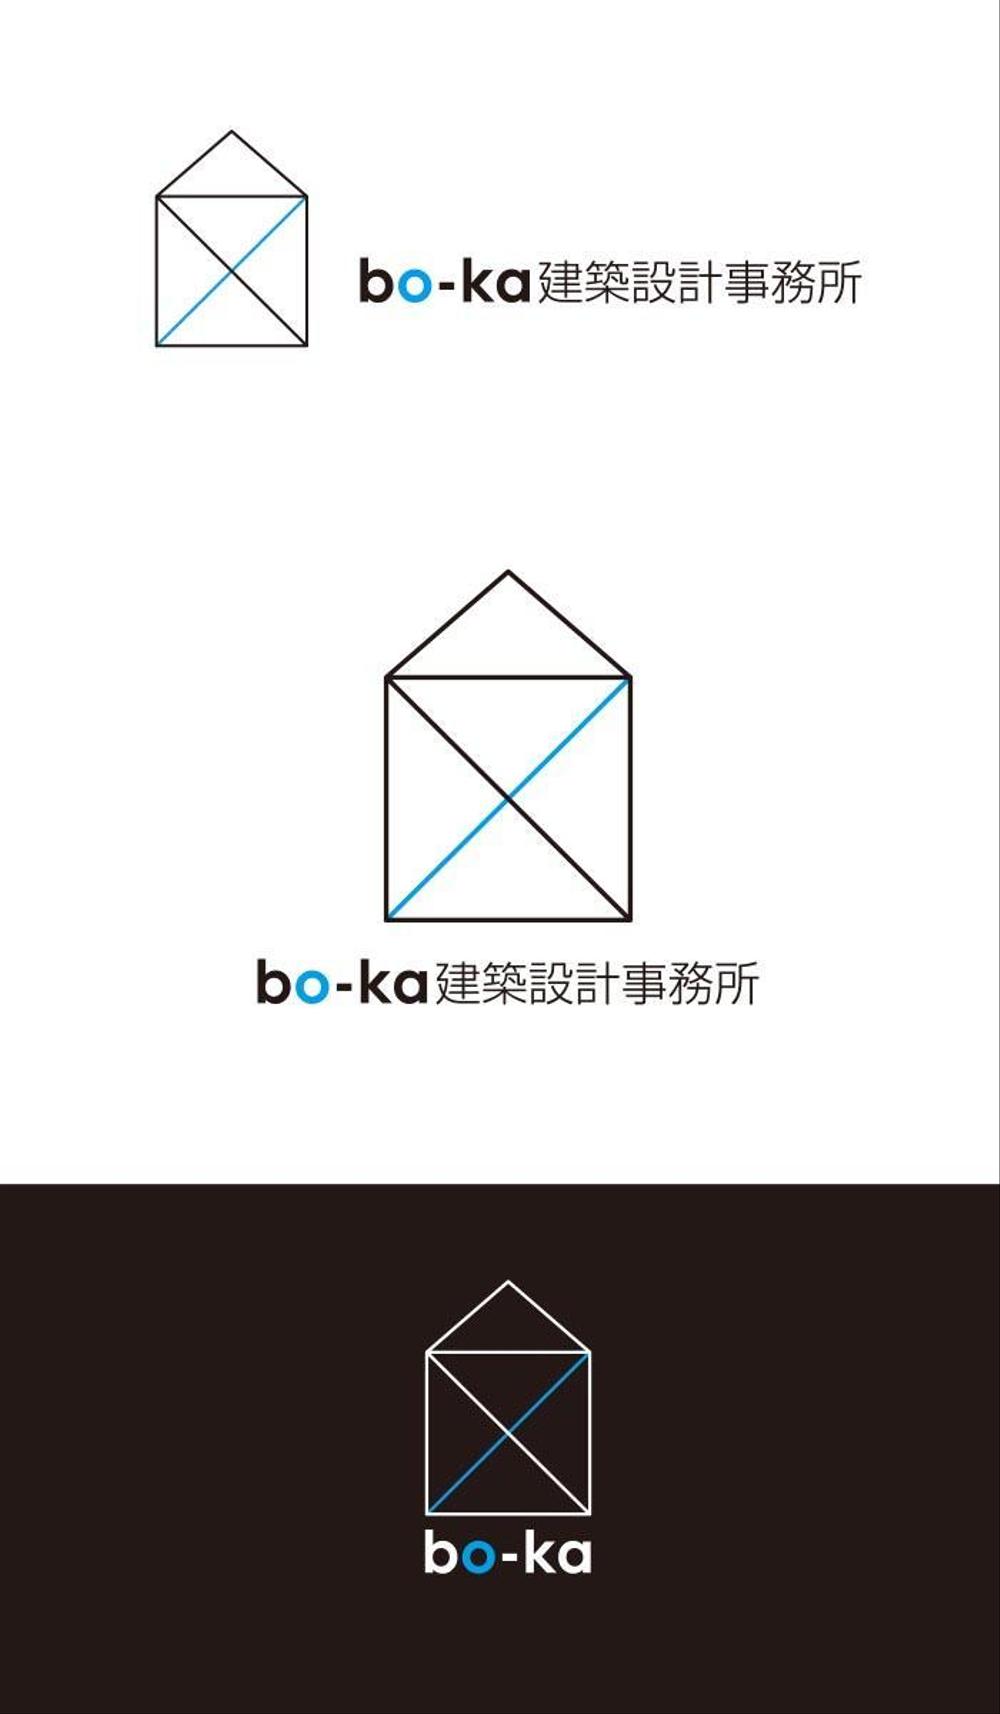 bo-ka建築設計事務所 logo_serve.jpg